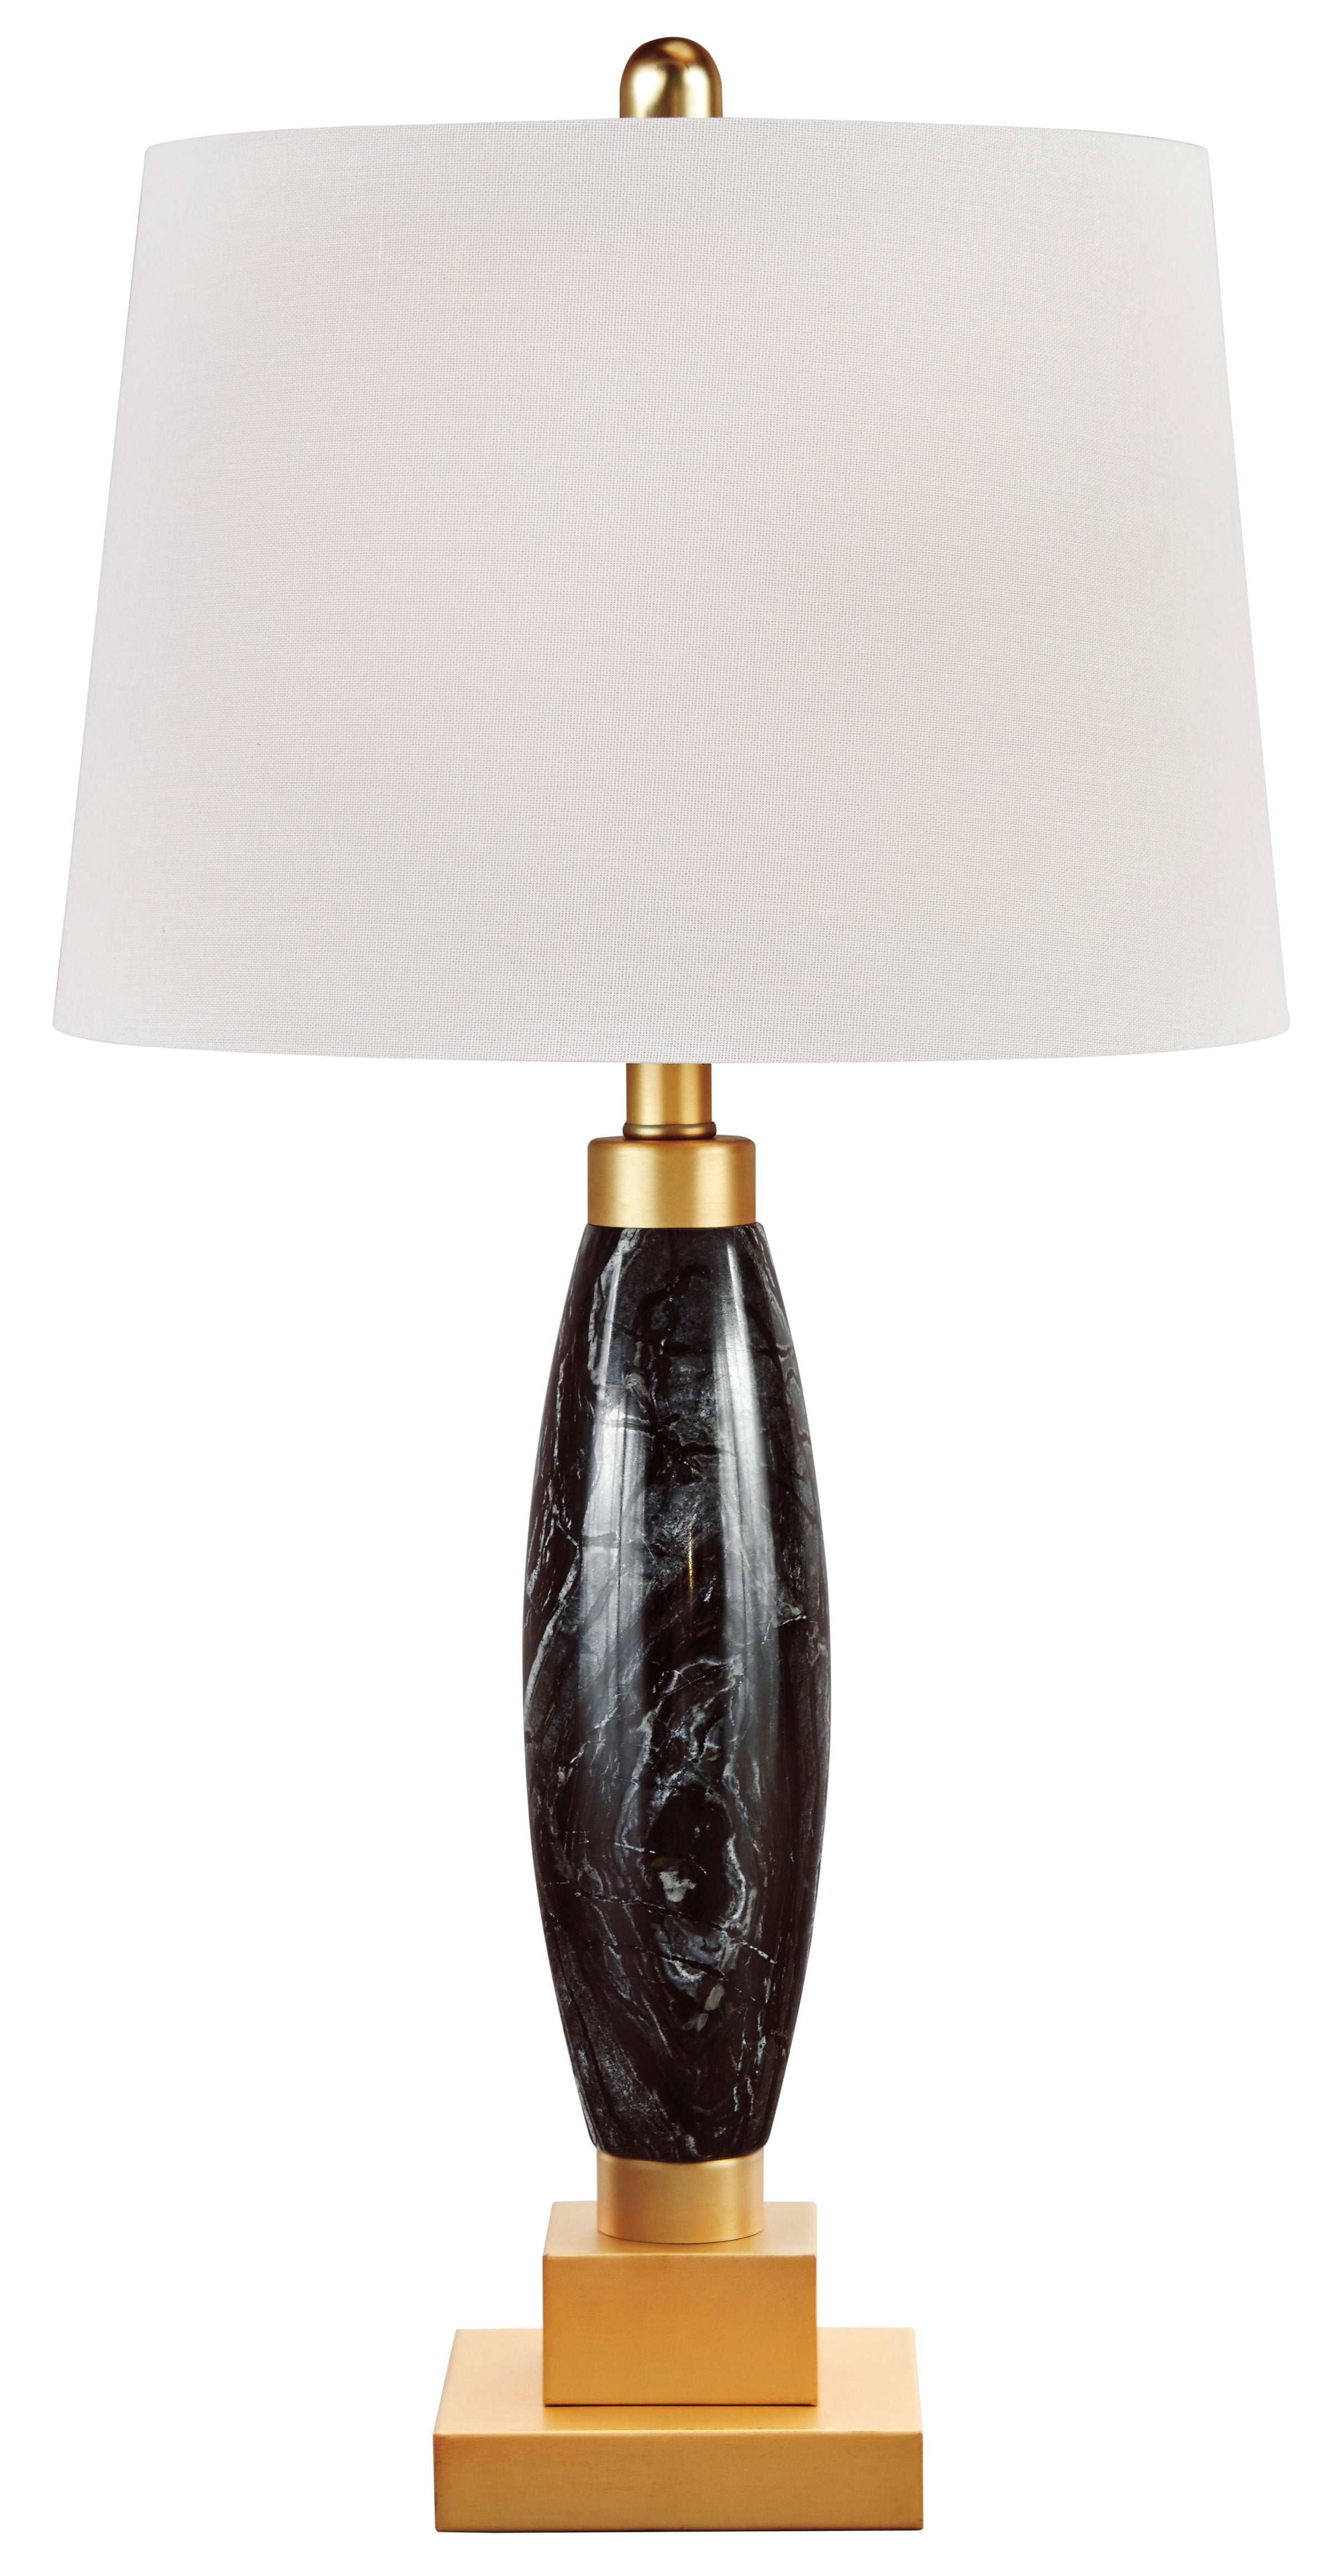 Malencia Table Lamp